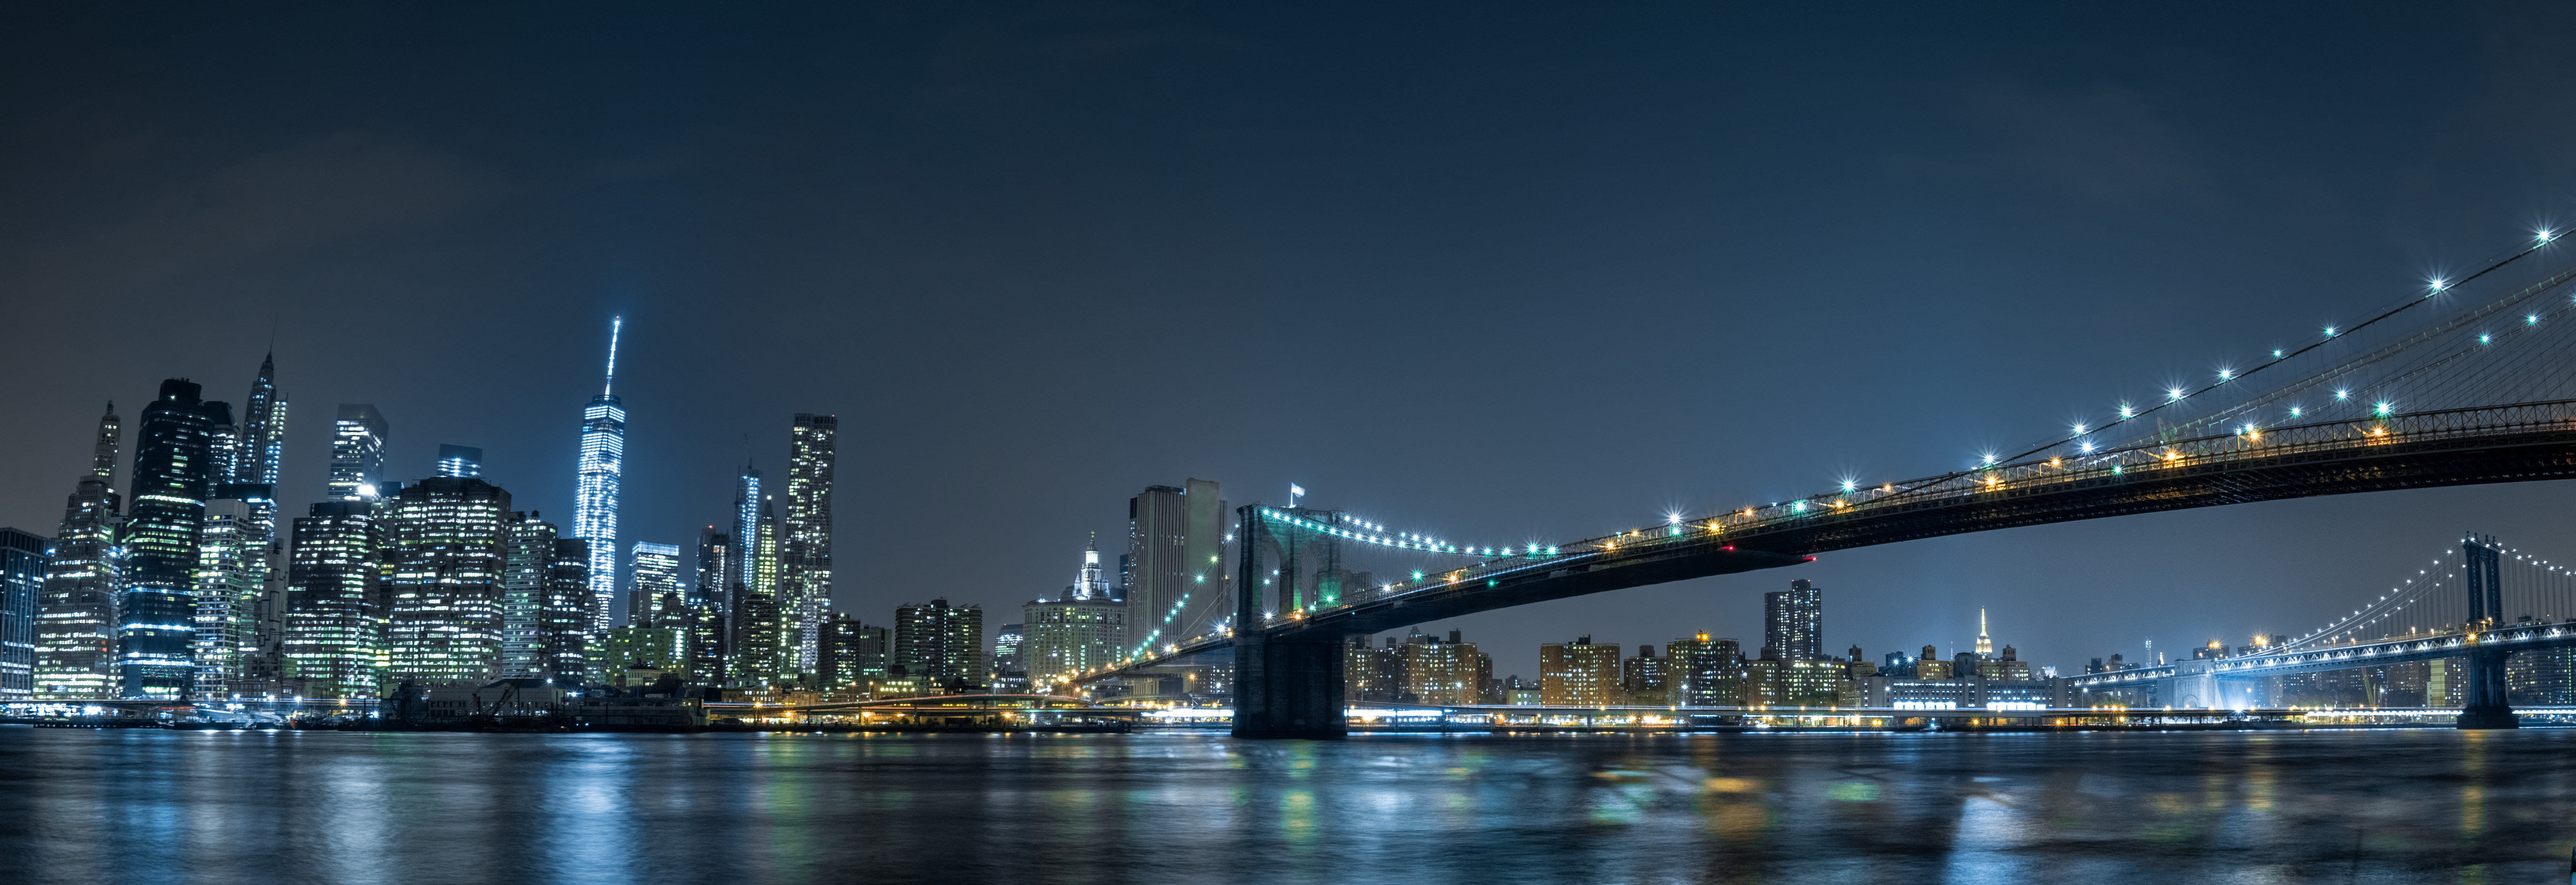 Brooklyn Bridge Manhattan New York 6416x2204